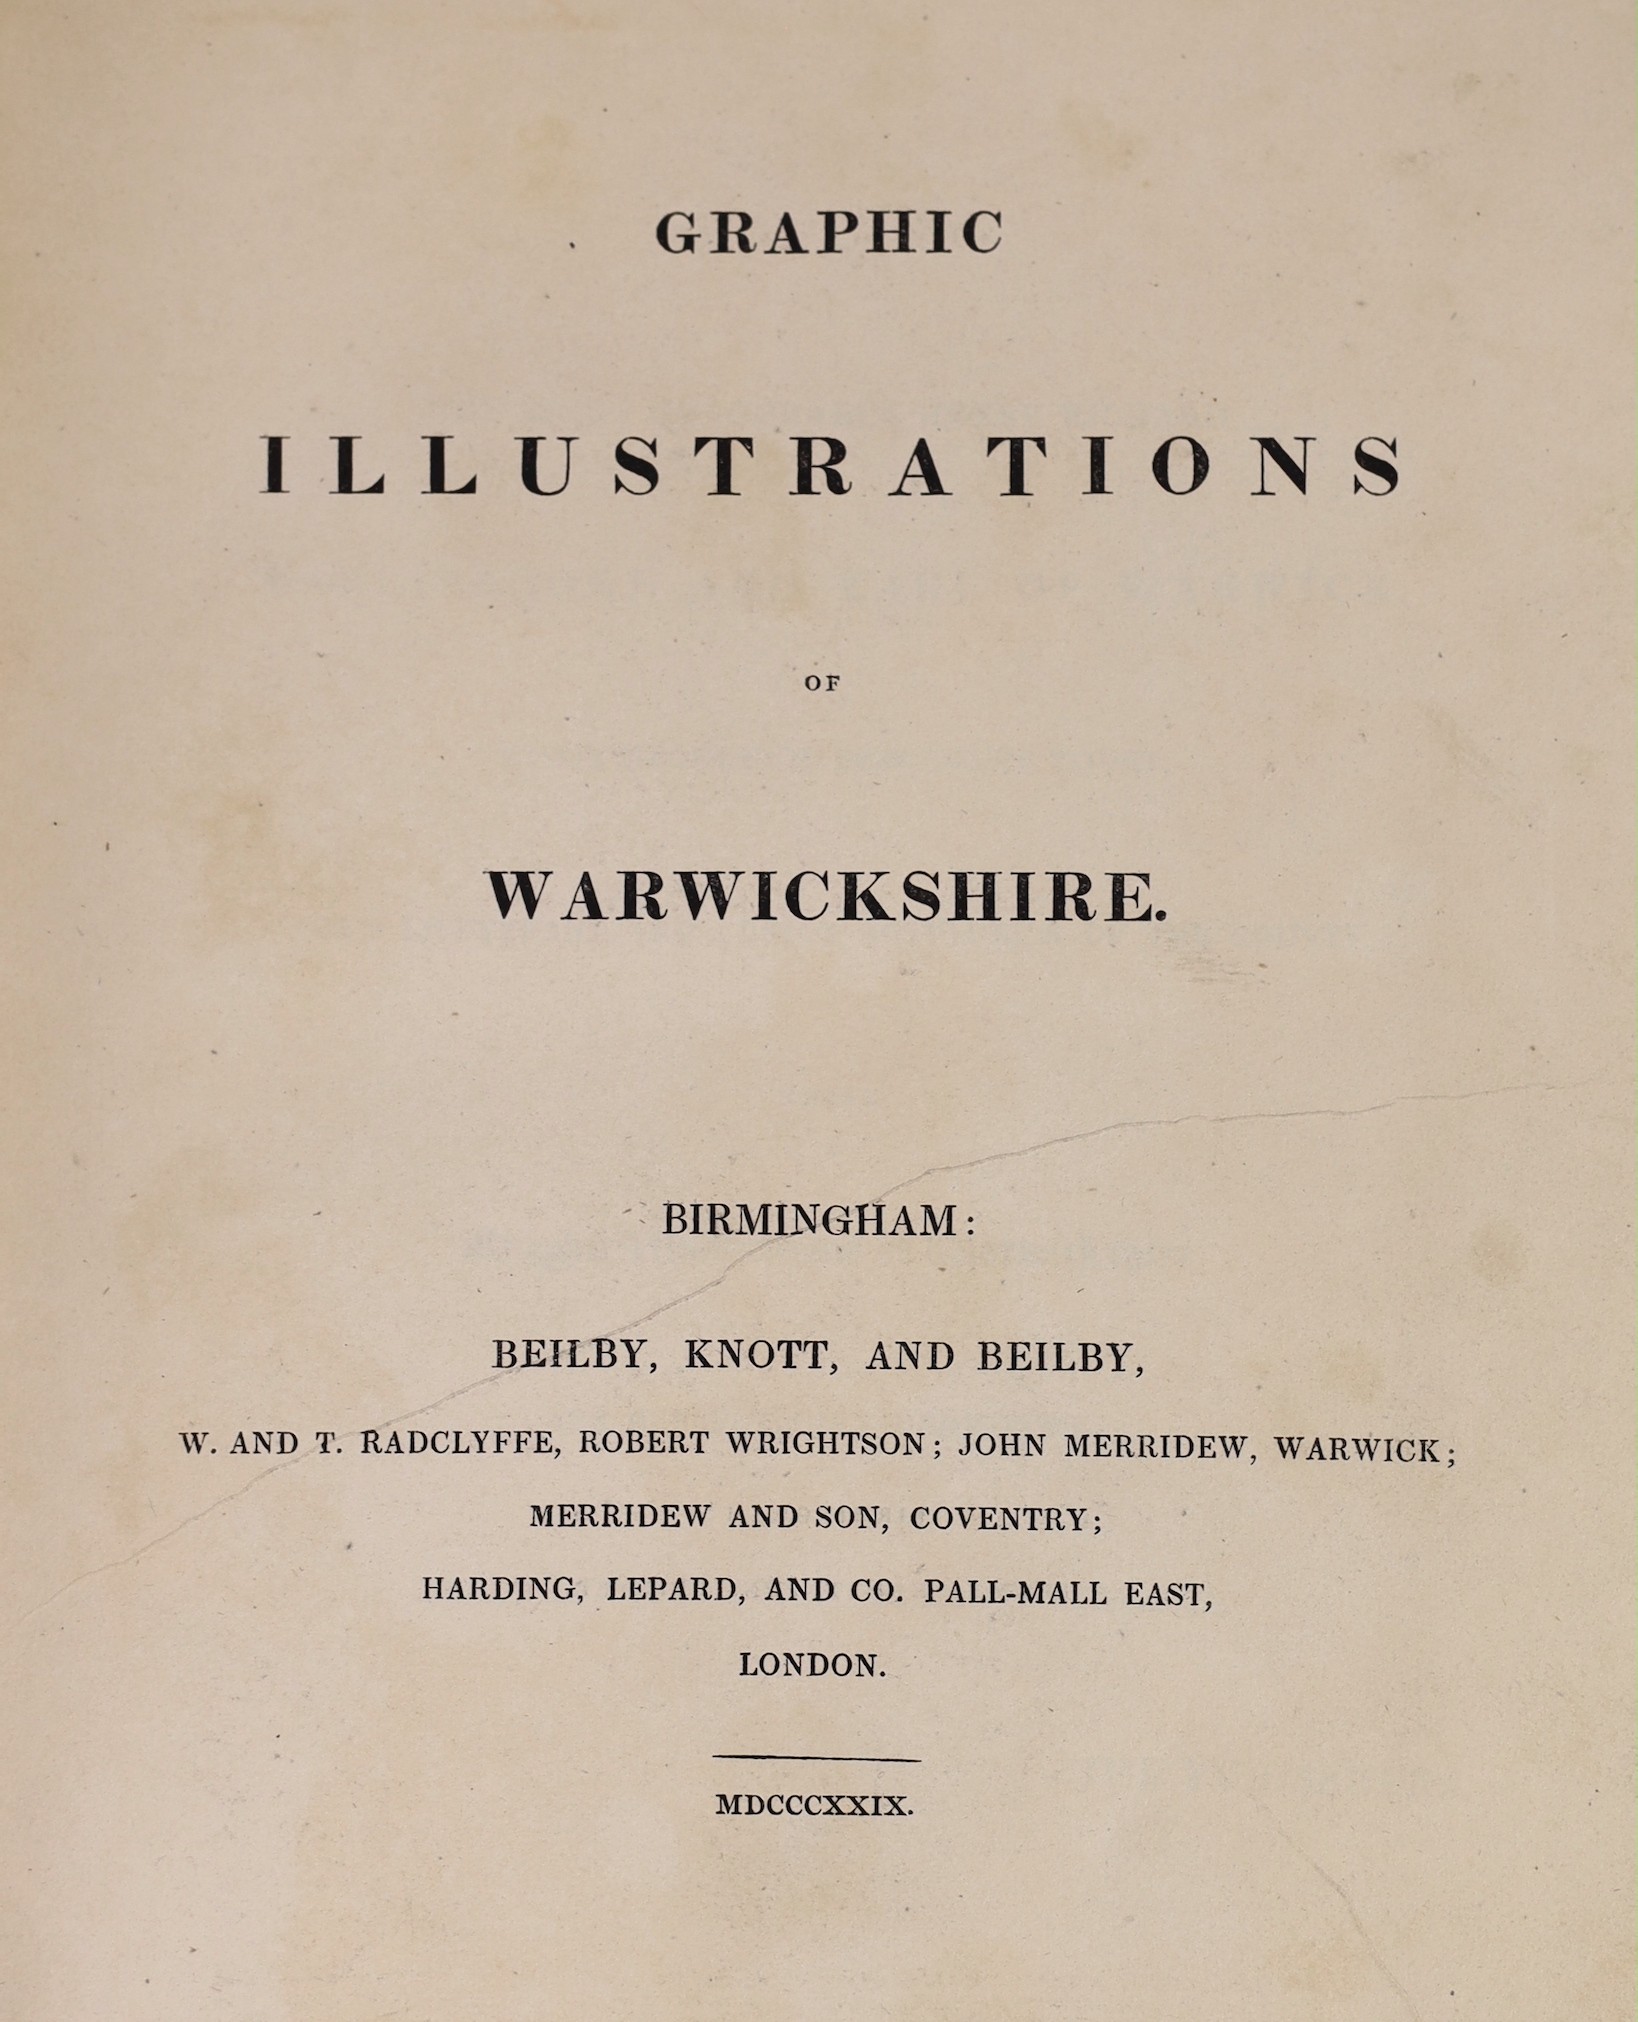 ° ° WARWICKSHIRE - Graphic - Graphic Illustrations of Warwickshire, folio, rebound green cloth, with